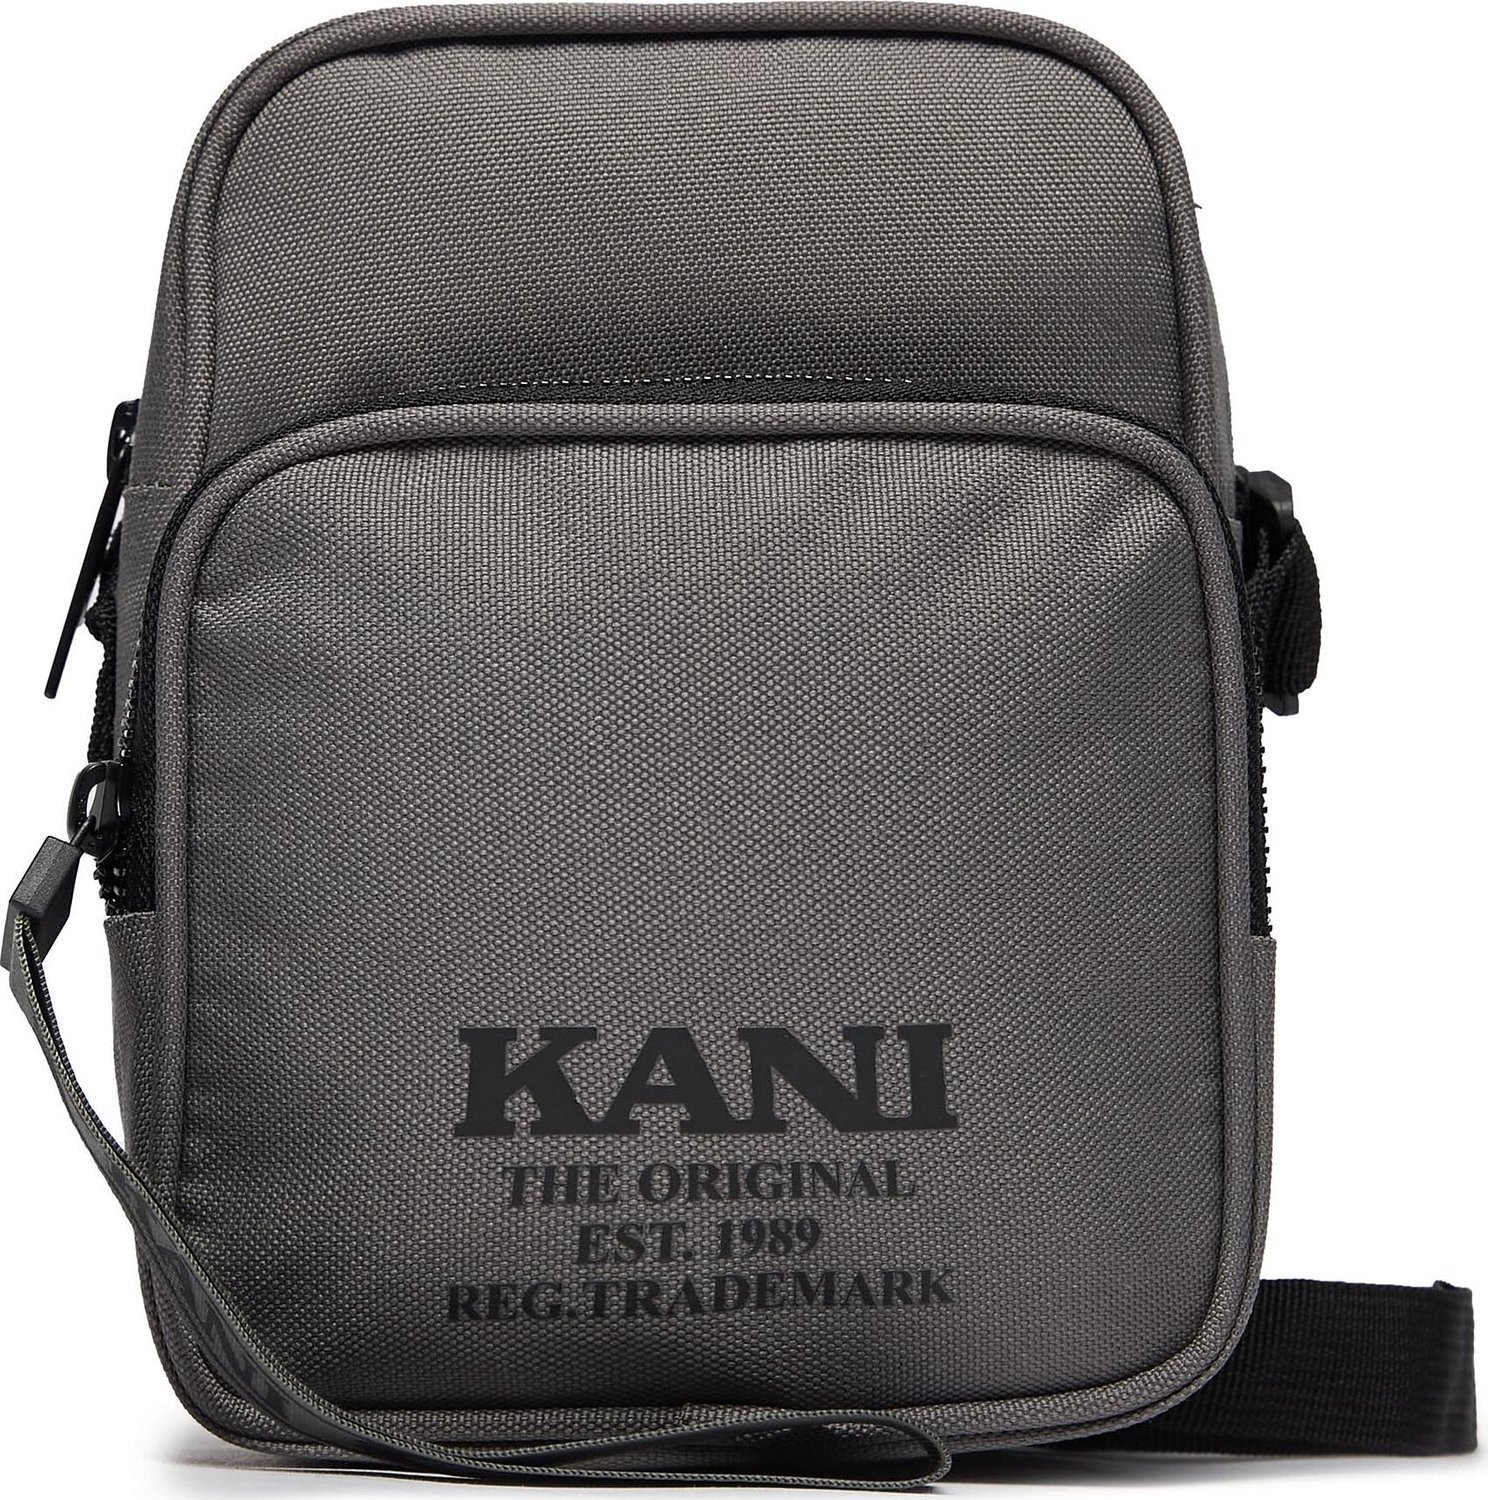 Brašna Karl Kani KK Retro Reflective Pouch Bag KA-233-026-2 GREY